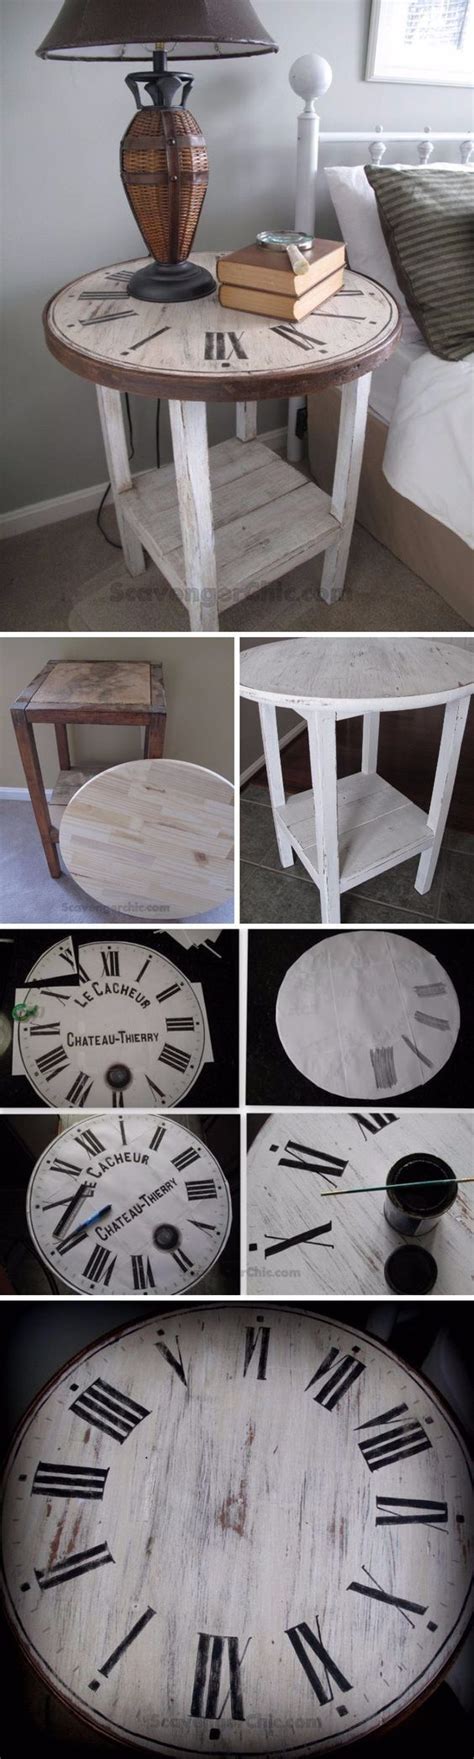 Diy Vintage Clock Table From A Flea Market Find Diy Furniture Hacks